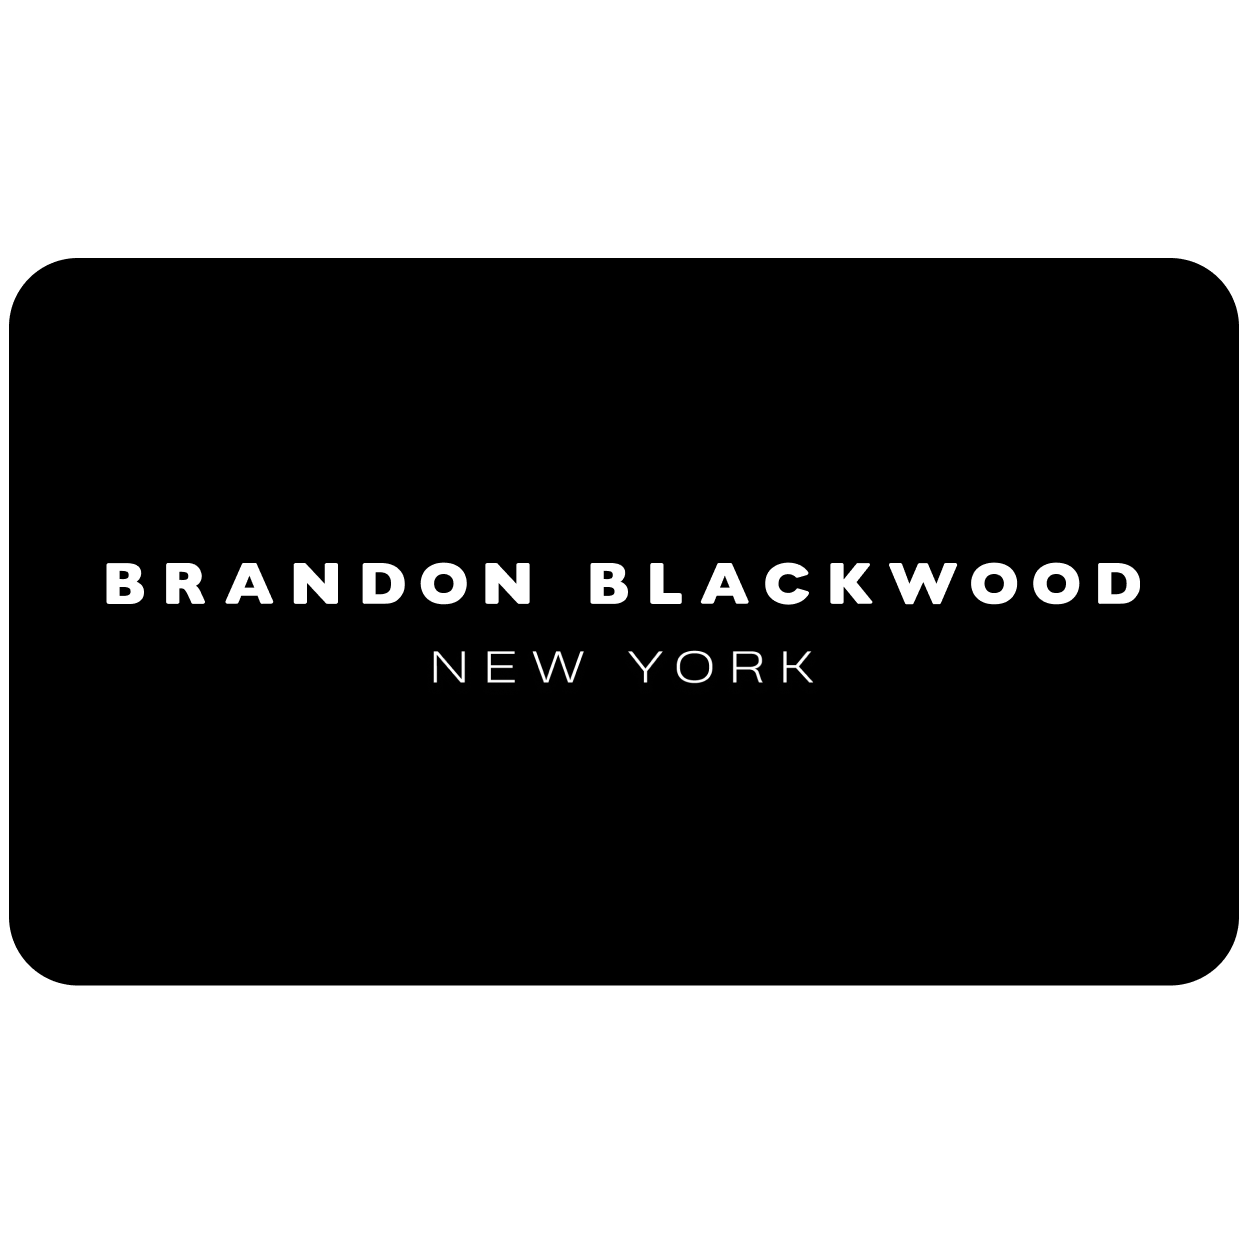 Brandon Blackwood New York - Gift card - Give the gift of choice!